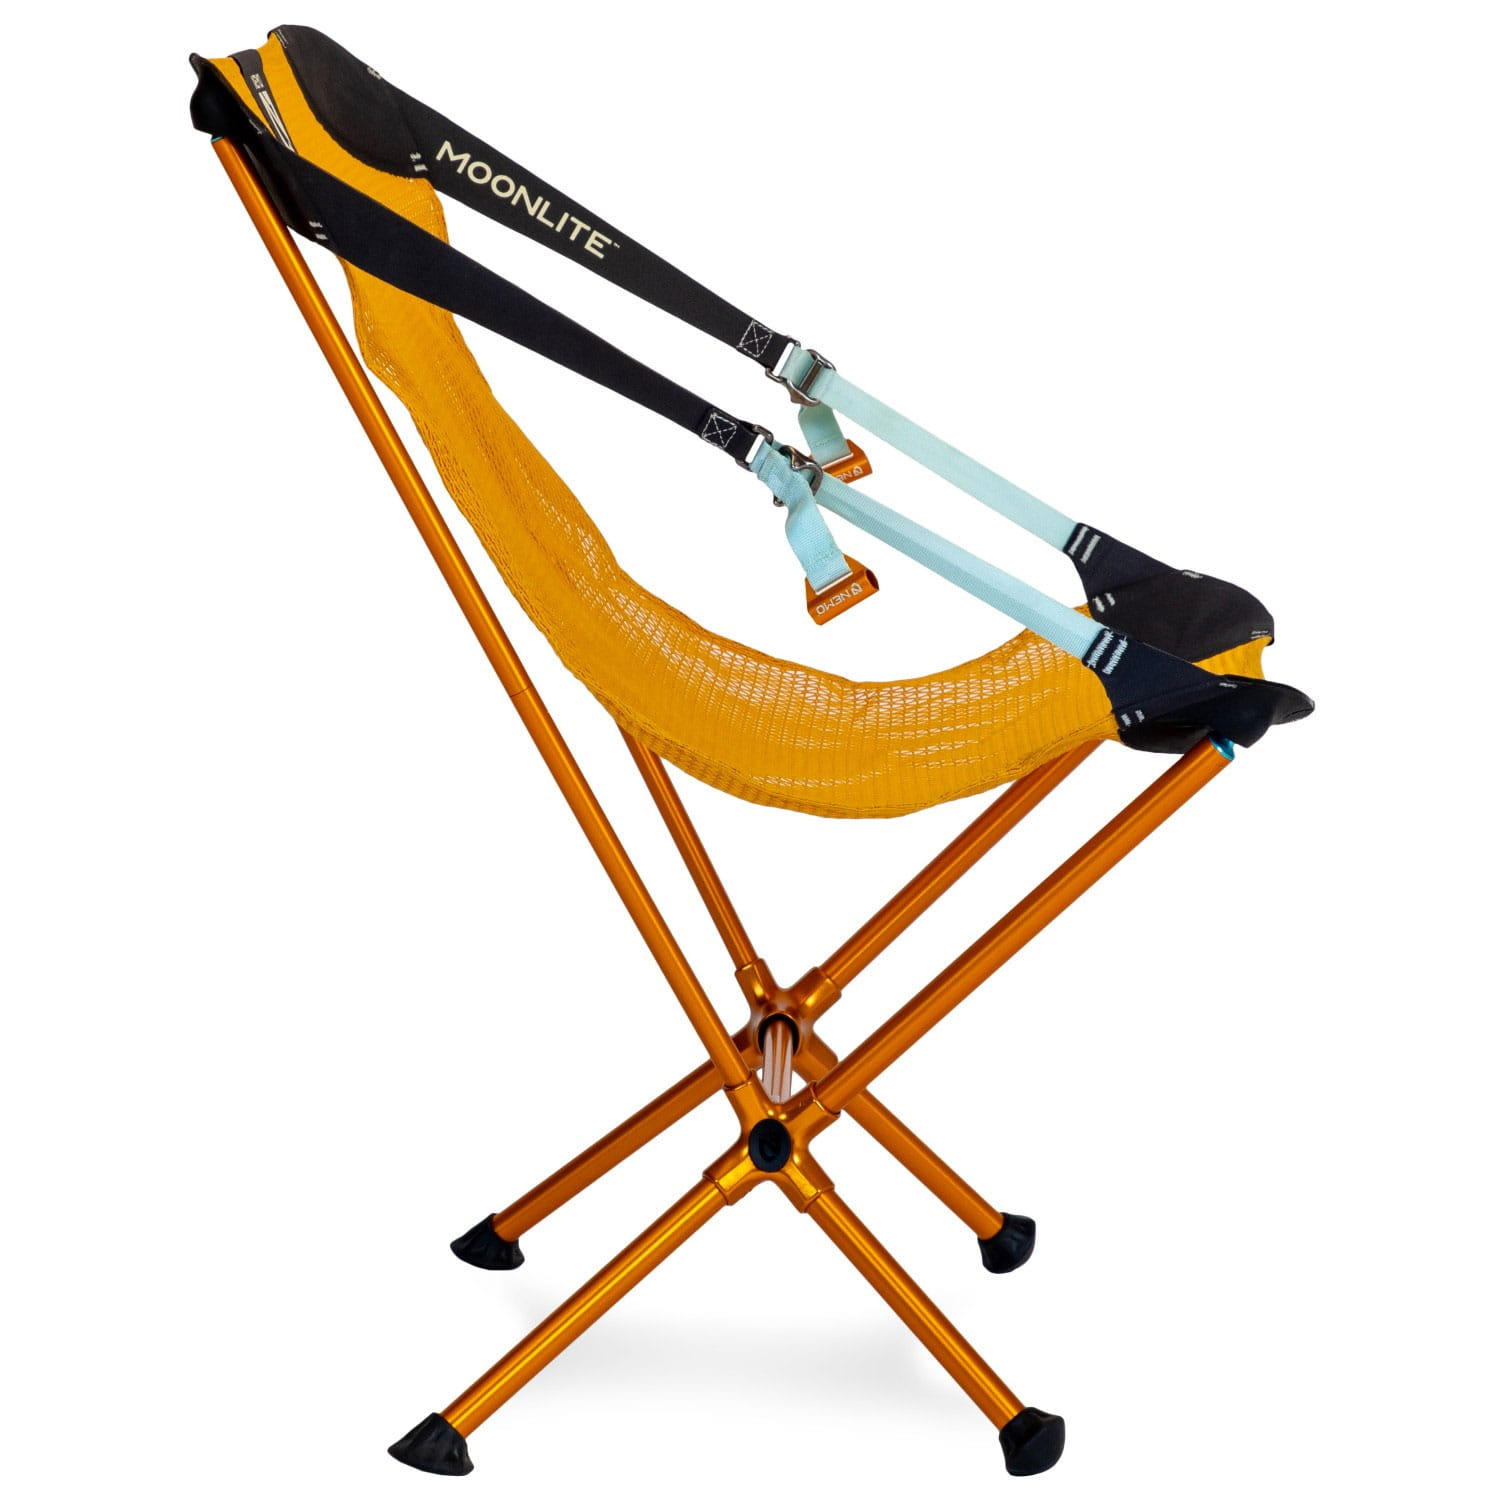 Nemo Moonlite Reclining Camp Chair Campingstuhl